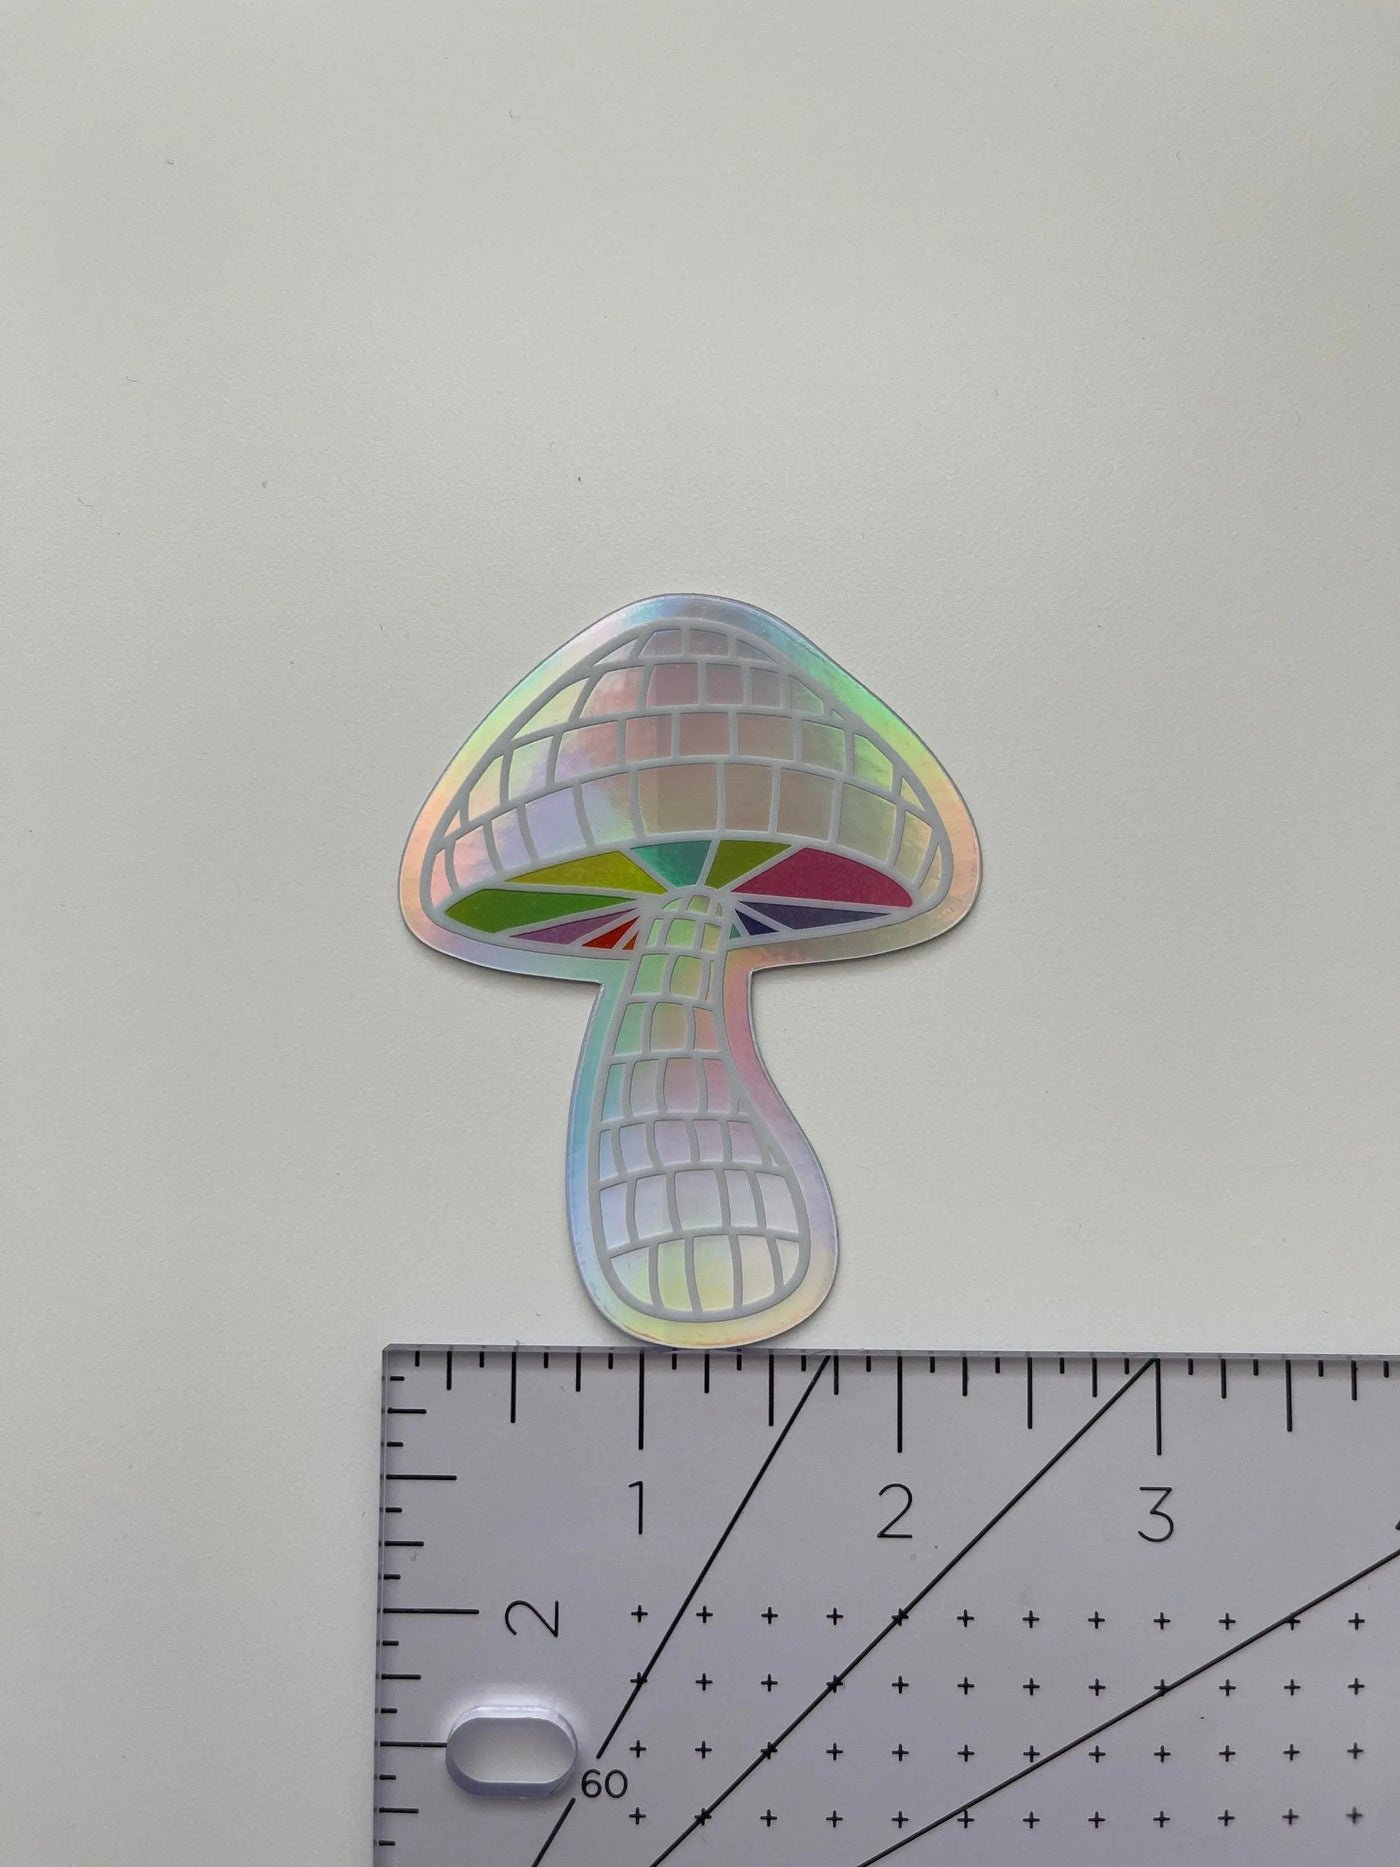 Holographic disco ball mushroom sticker MangoIllustrated